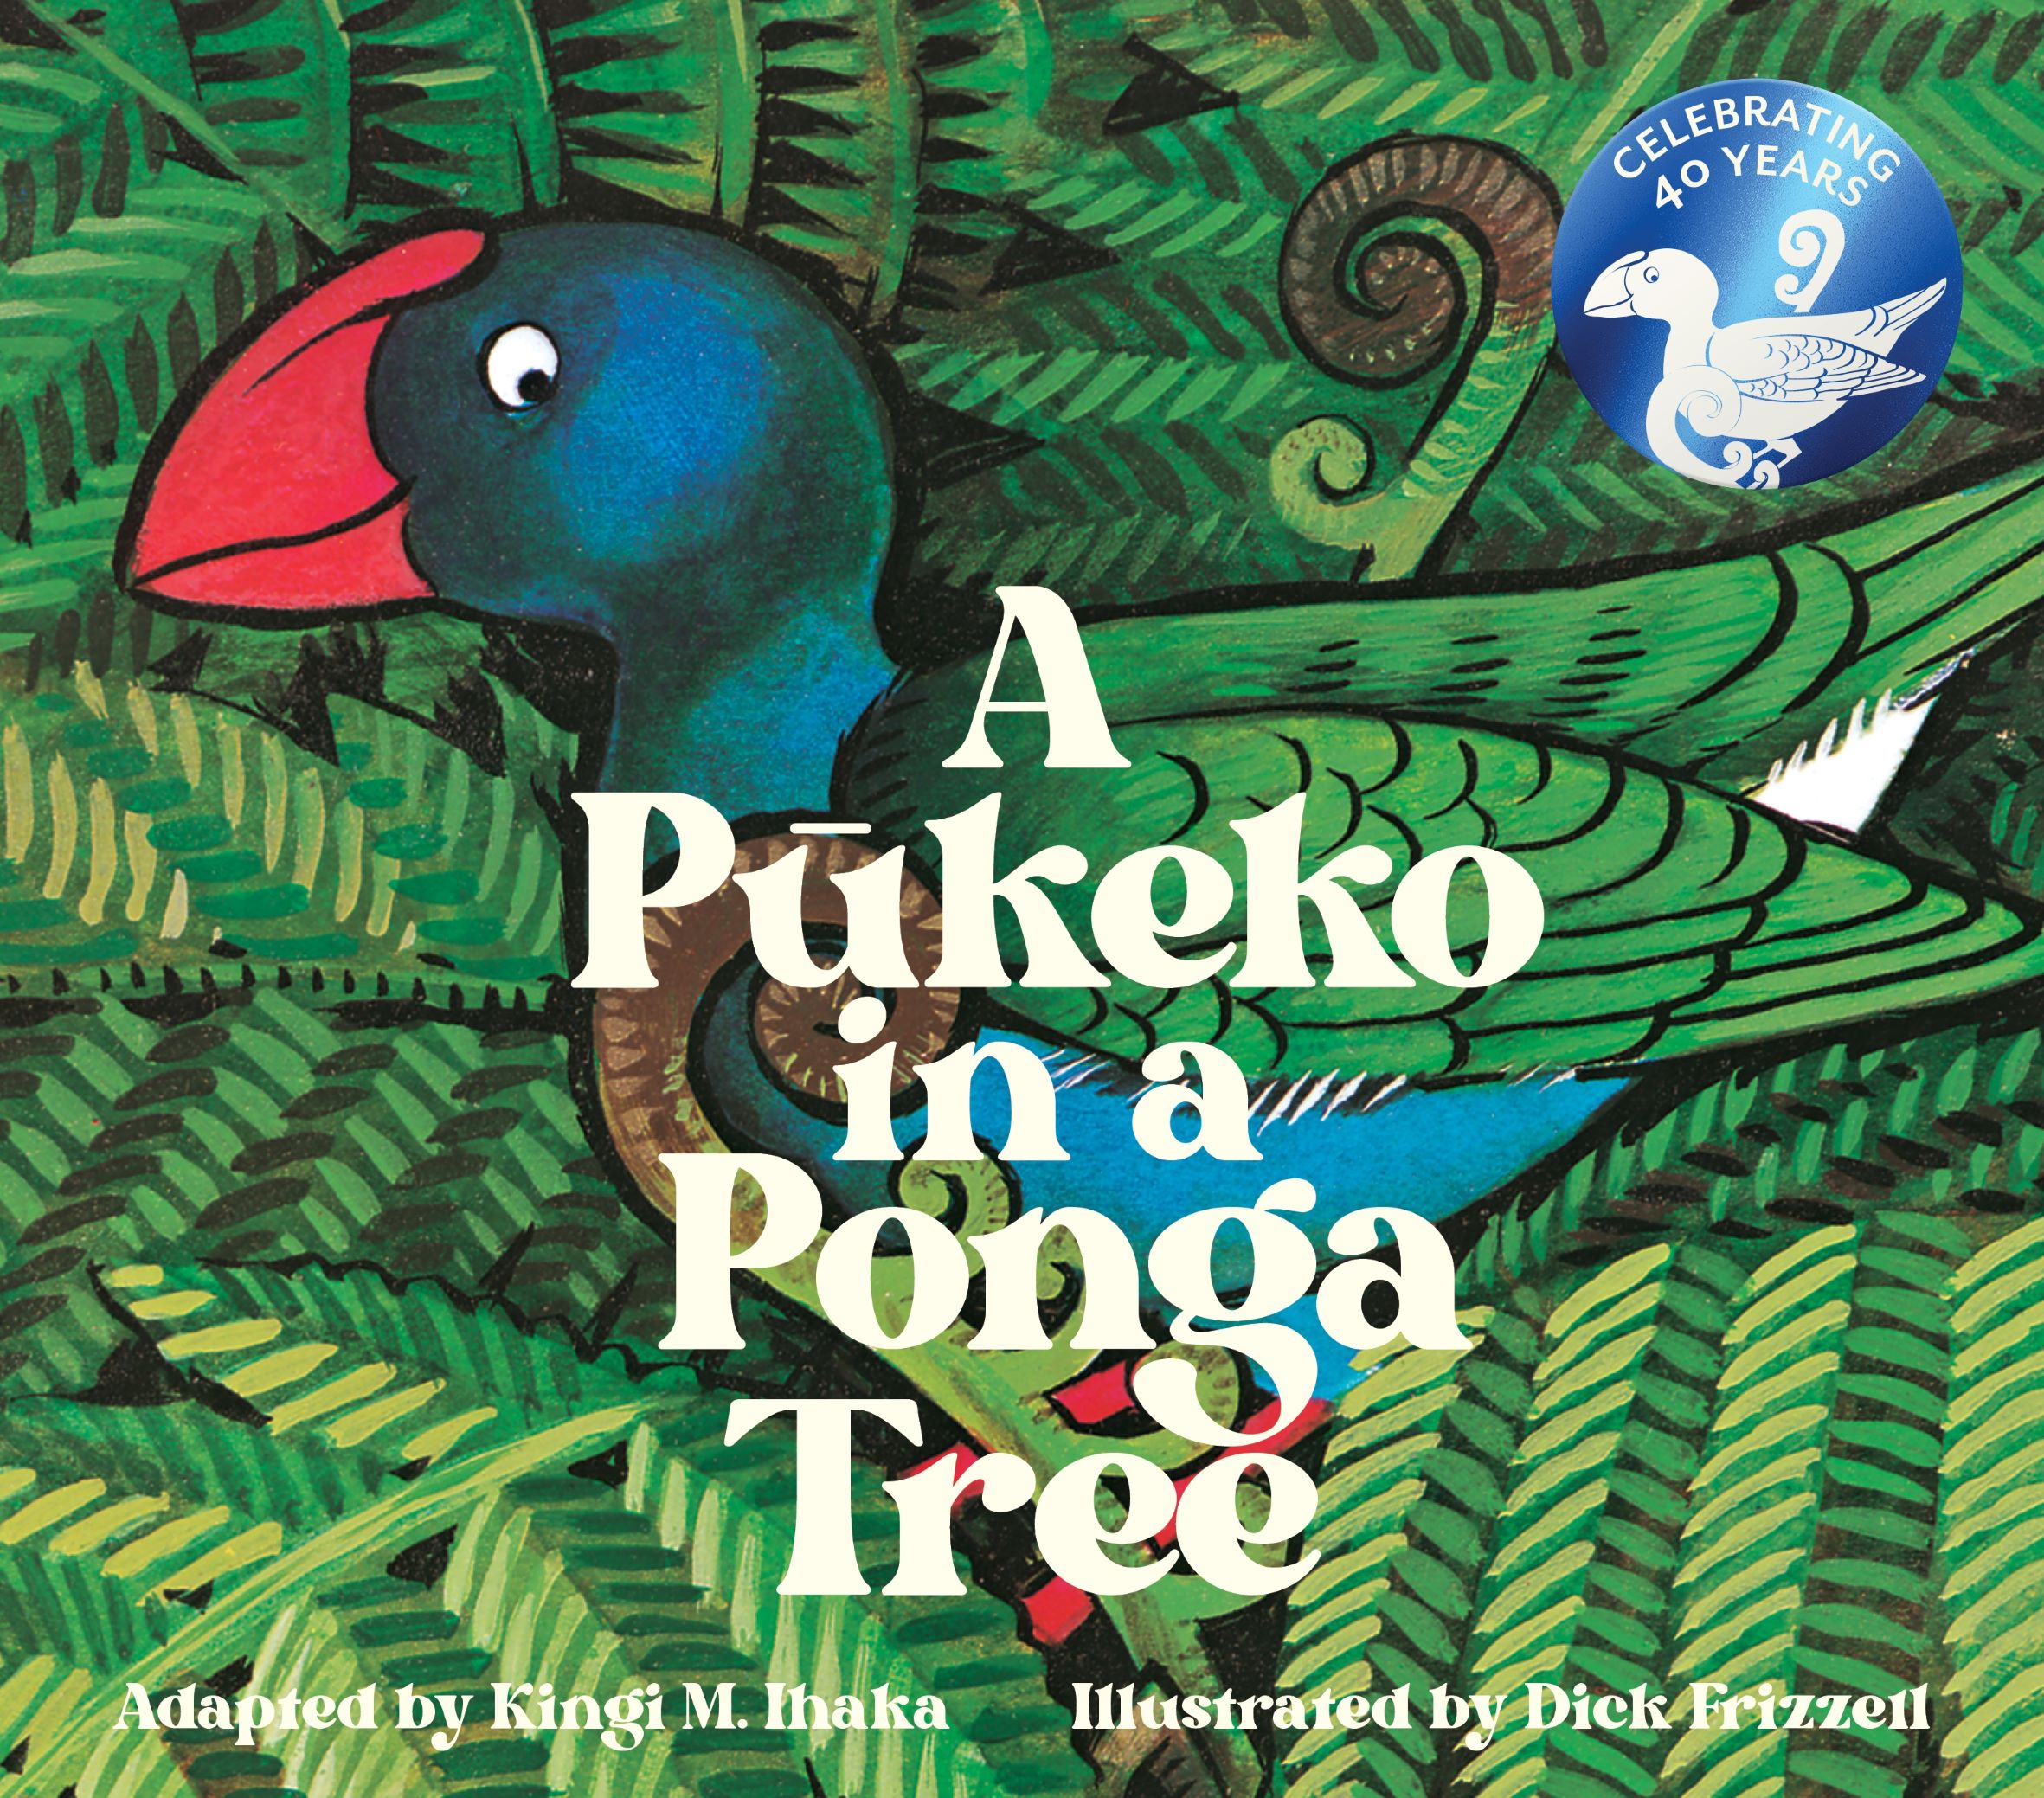 A Pūkeko in a Ponga tree book cover.